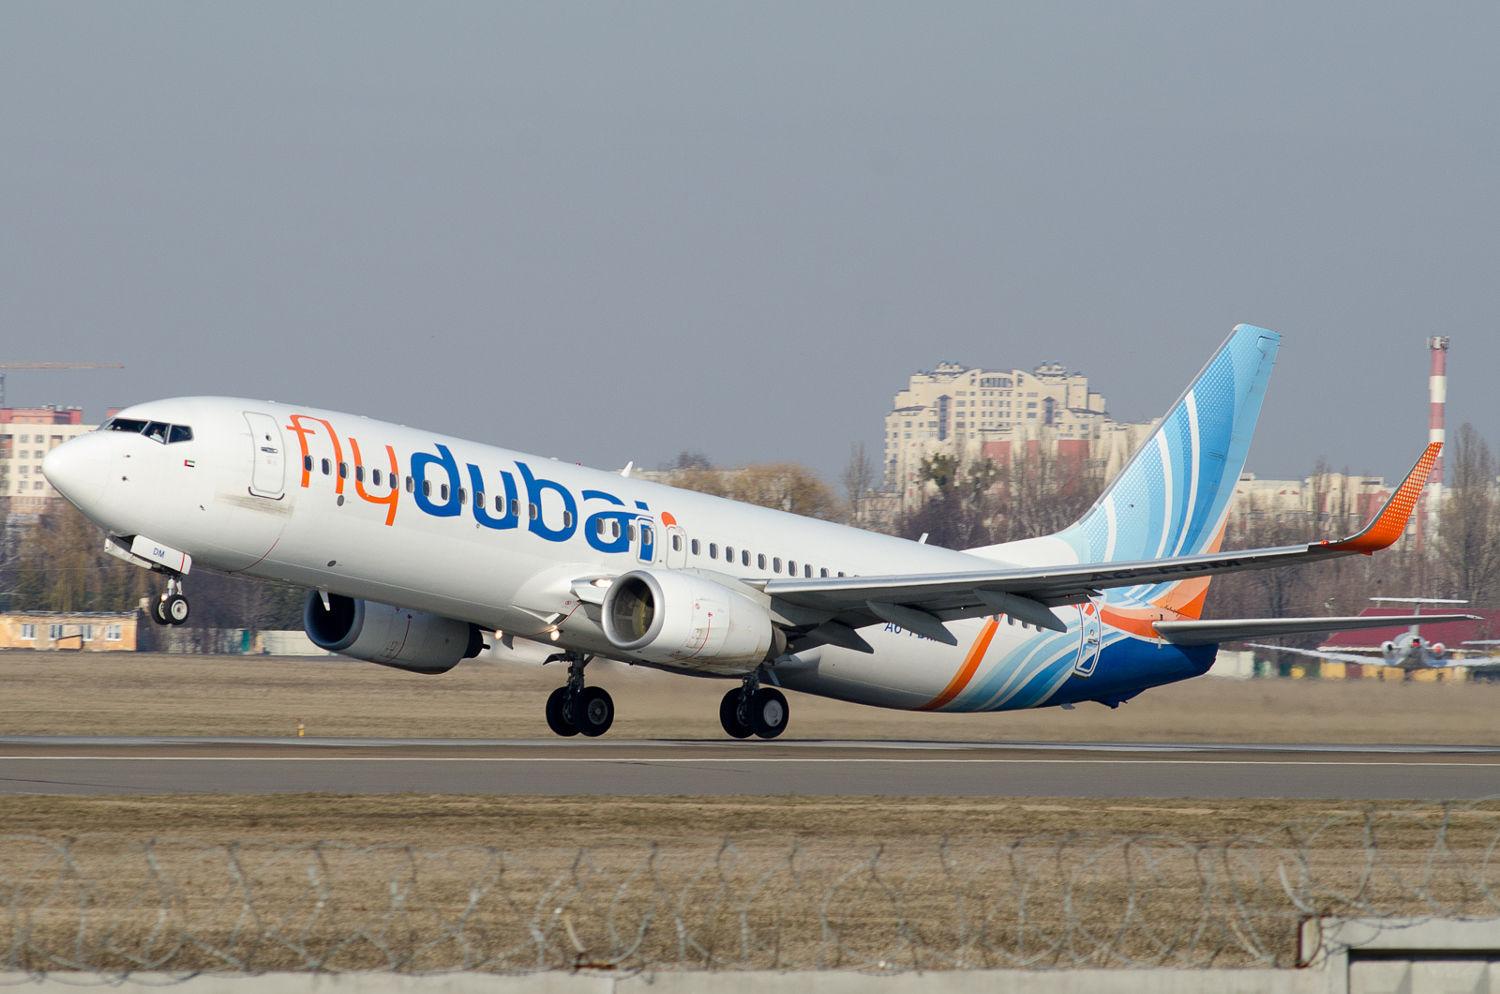 Avion "FlyDubaija" sletio u Beograd - Avaz